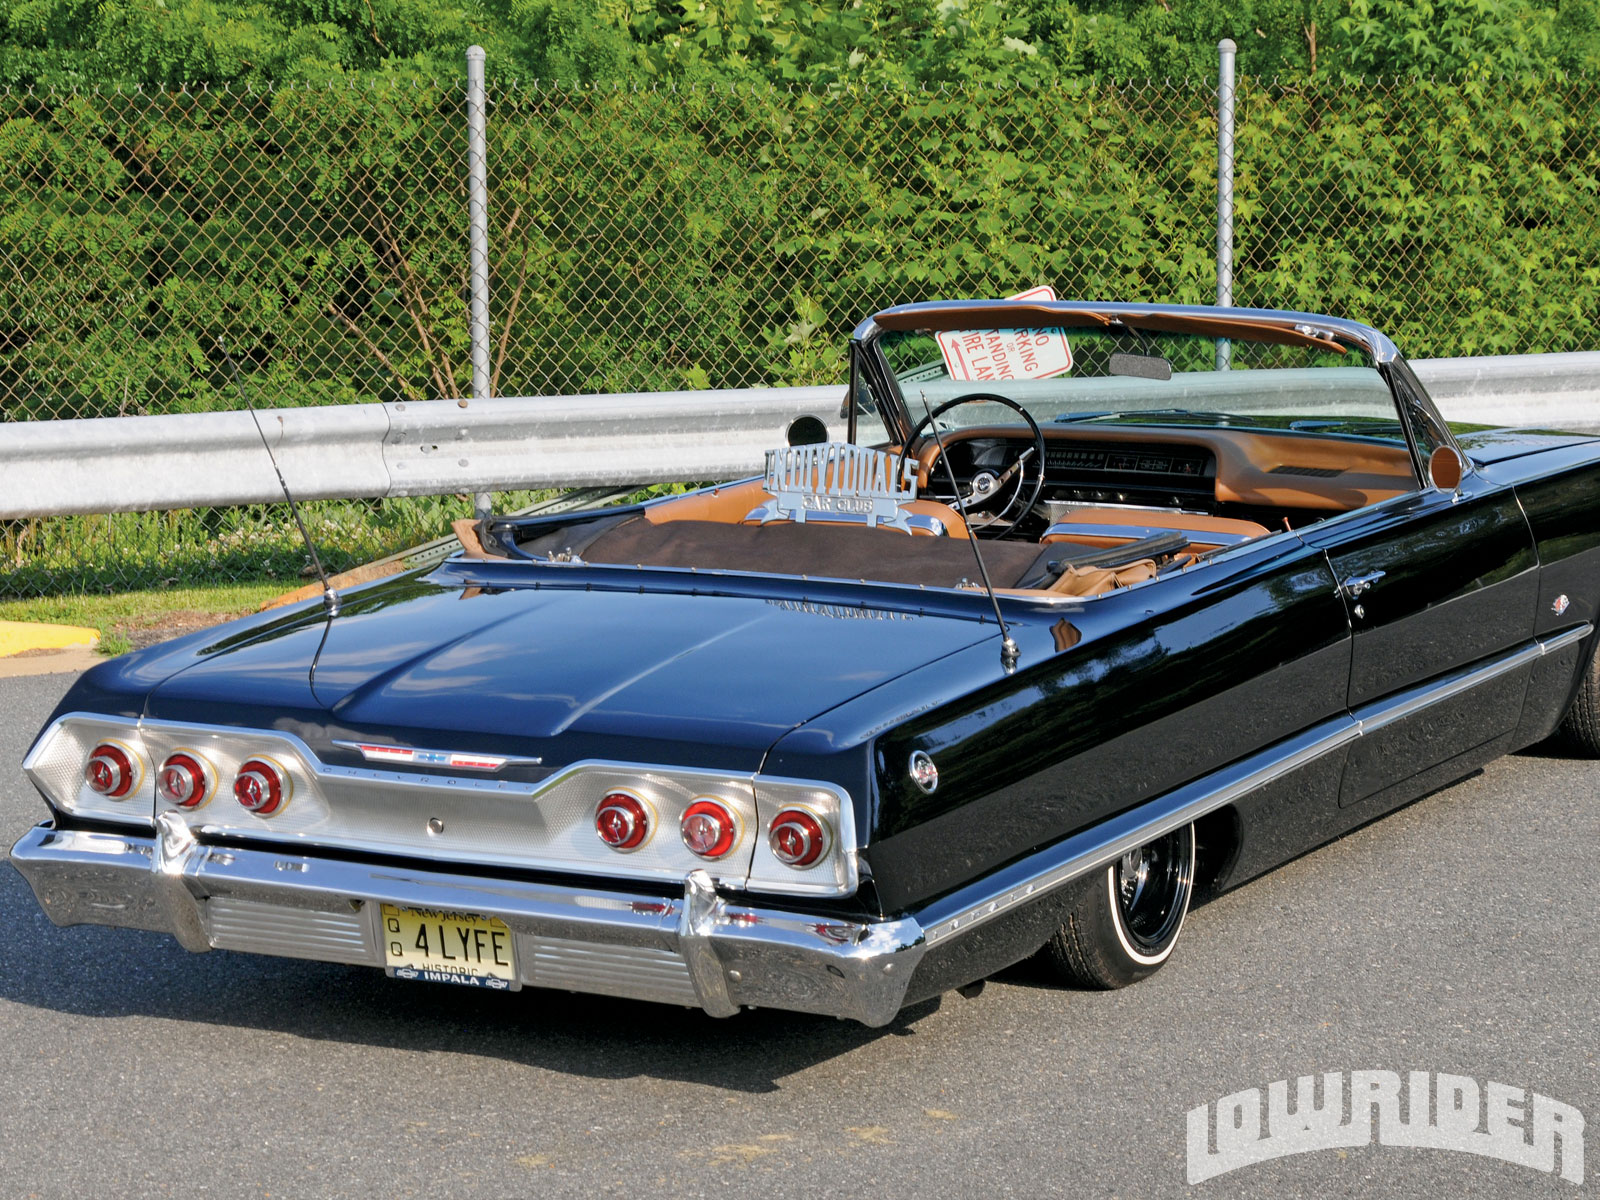 Amazing 1963 Chevrolet Impala Pictures & Backgrounds